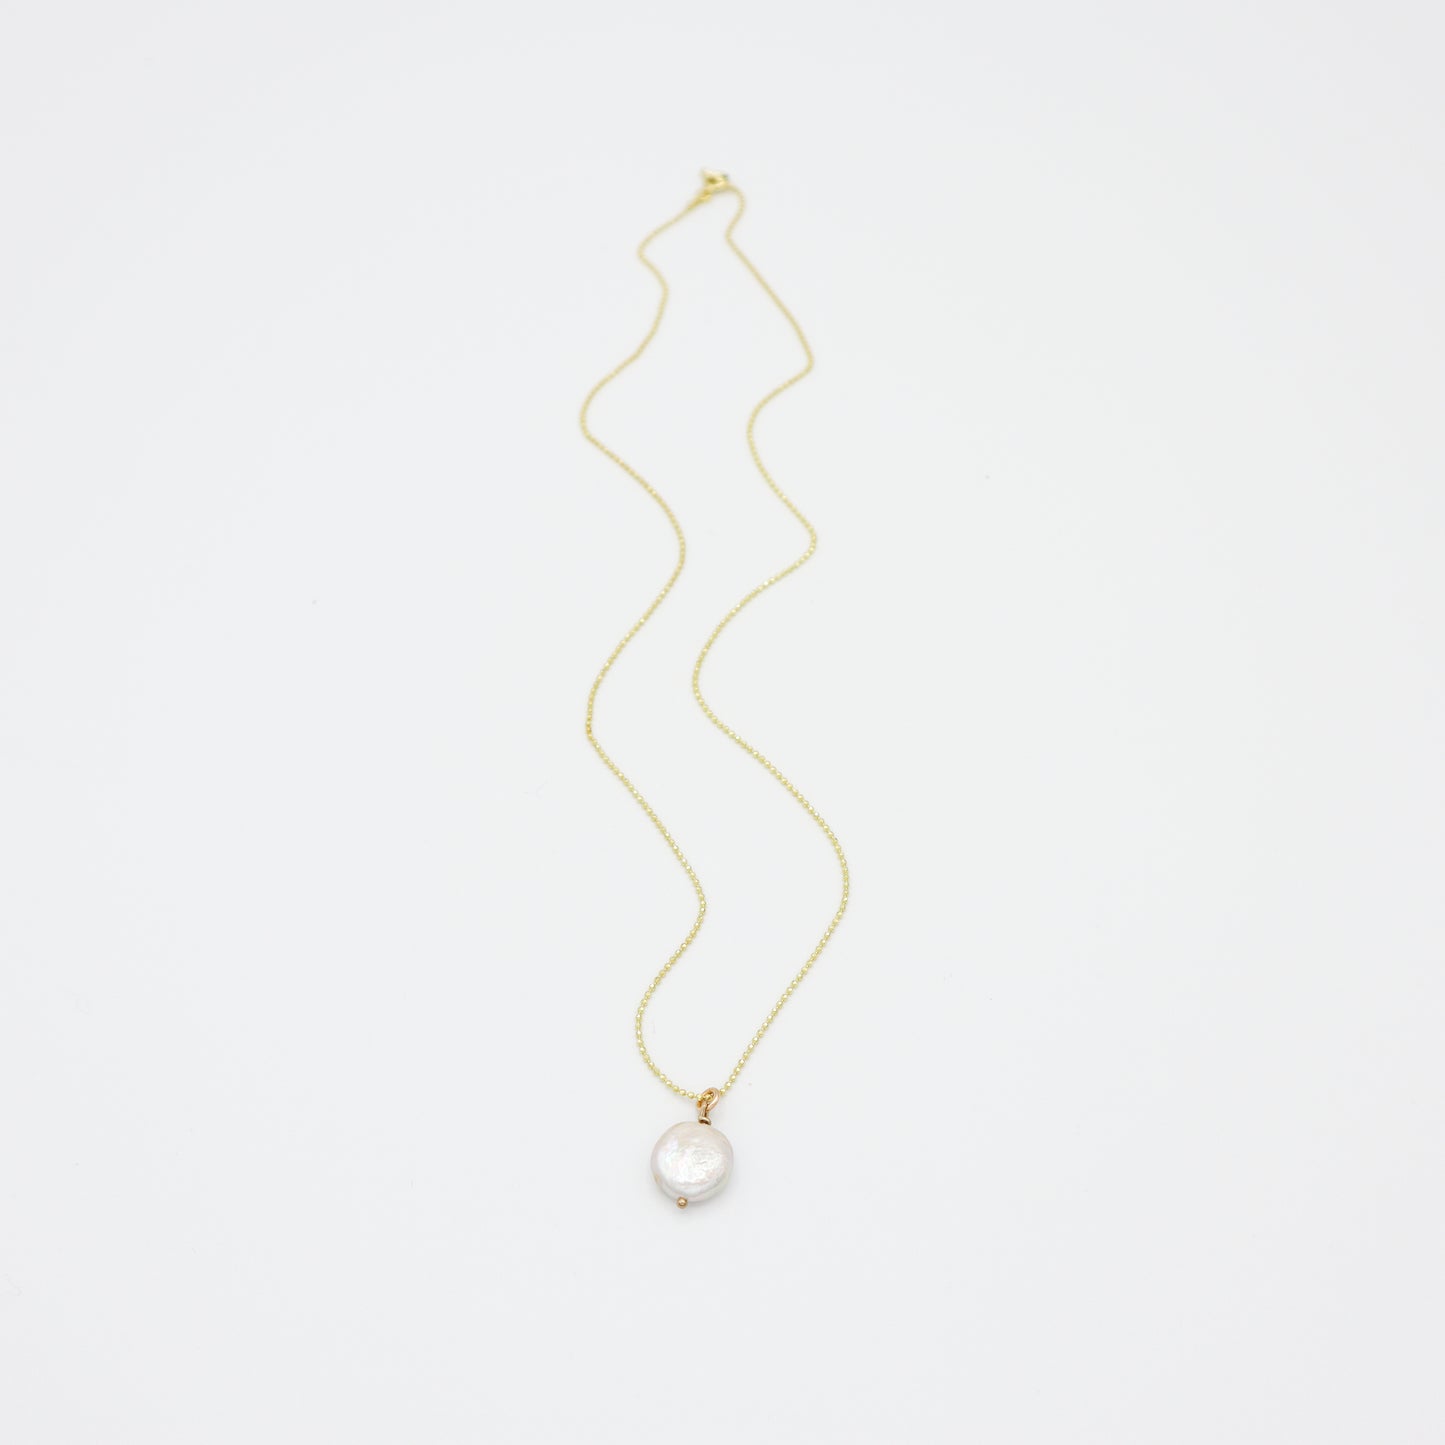 Roop Jewelry Sweet Pearl Necklace in Vermeil. Simple coin pearl necklace. Handmade pearl jewelry from Oakland, Ca.